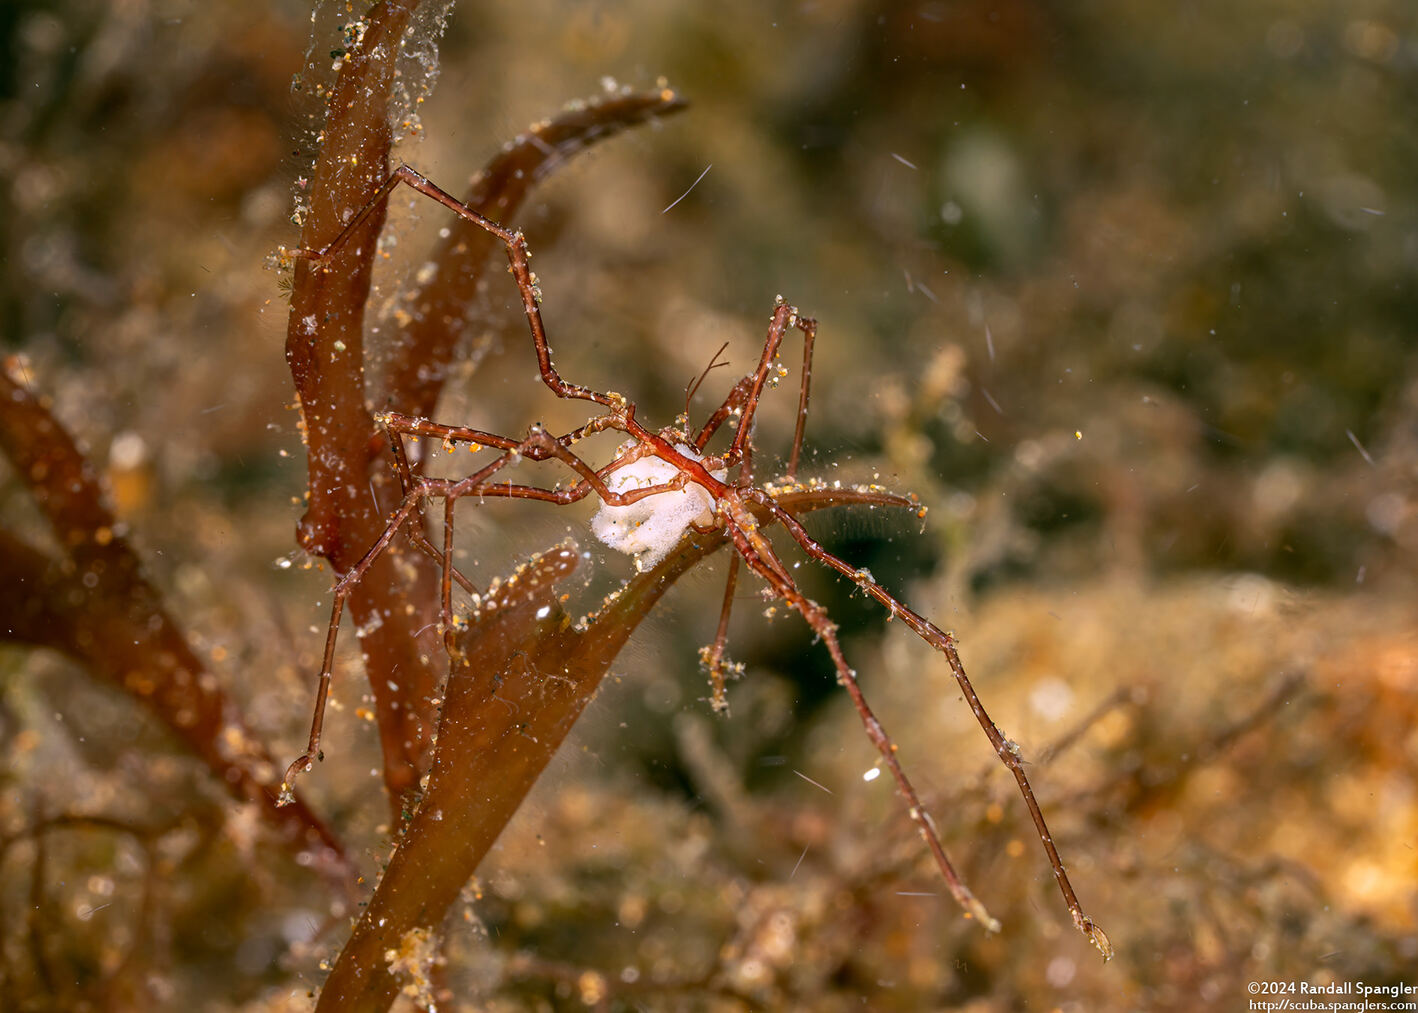 Class Pycnogonida (Sea Spider); Carrying eggs